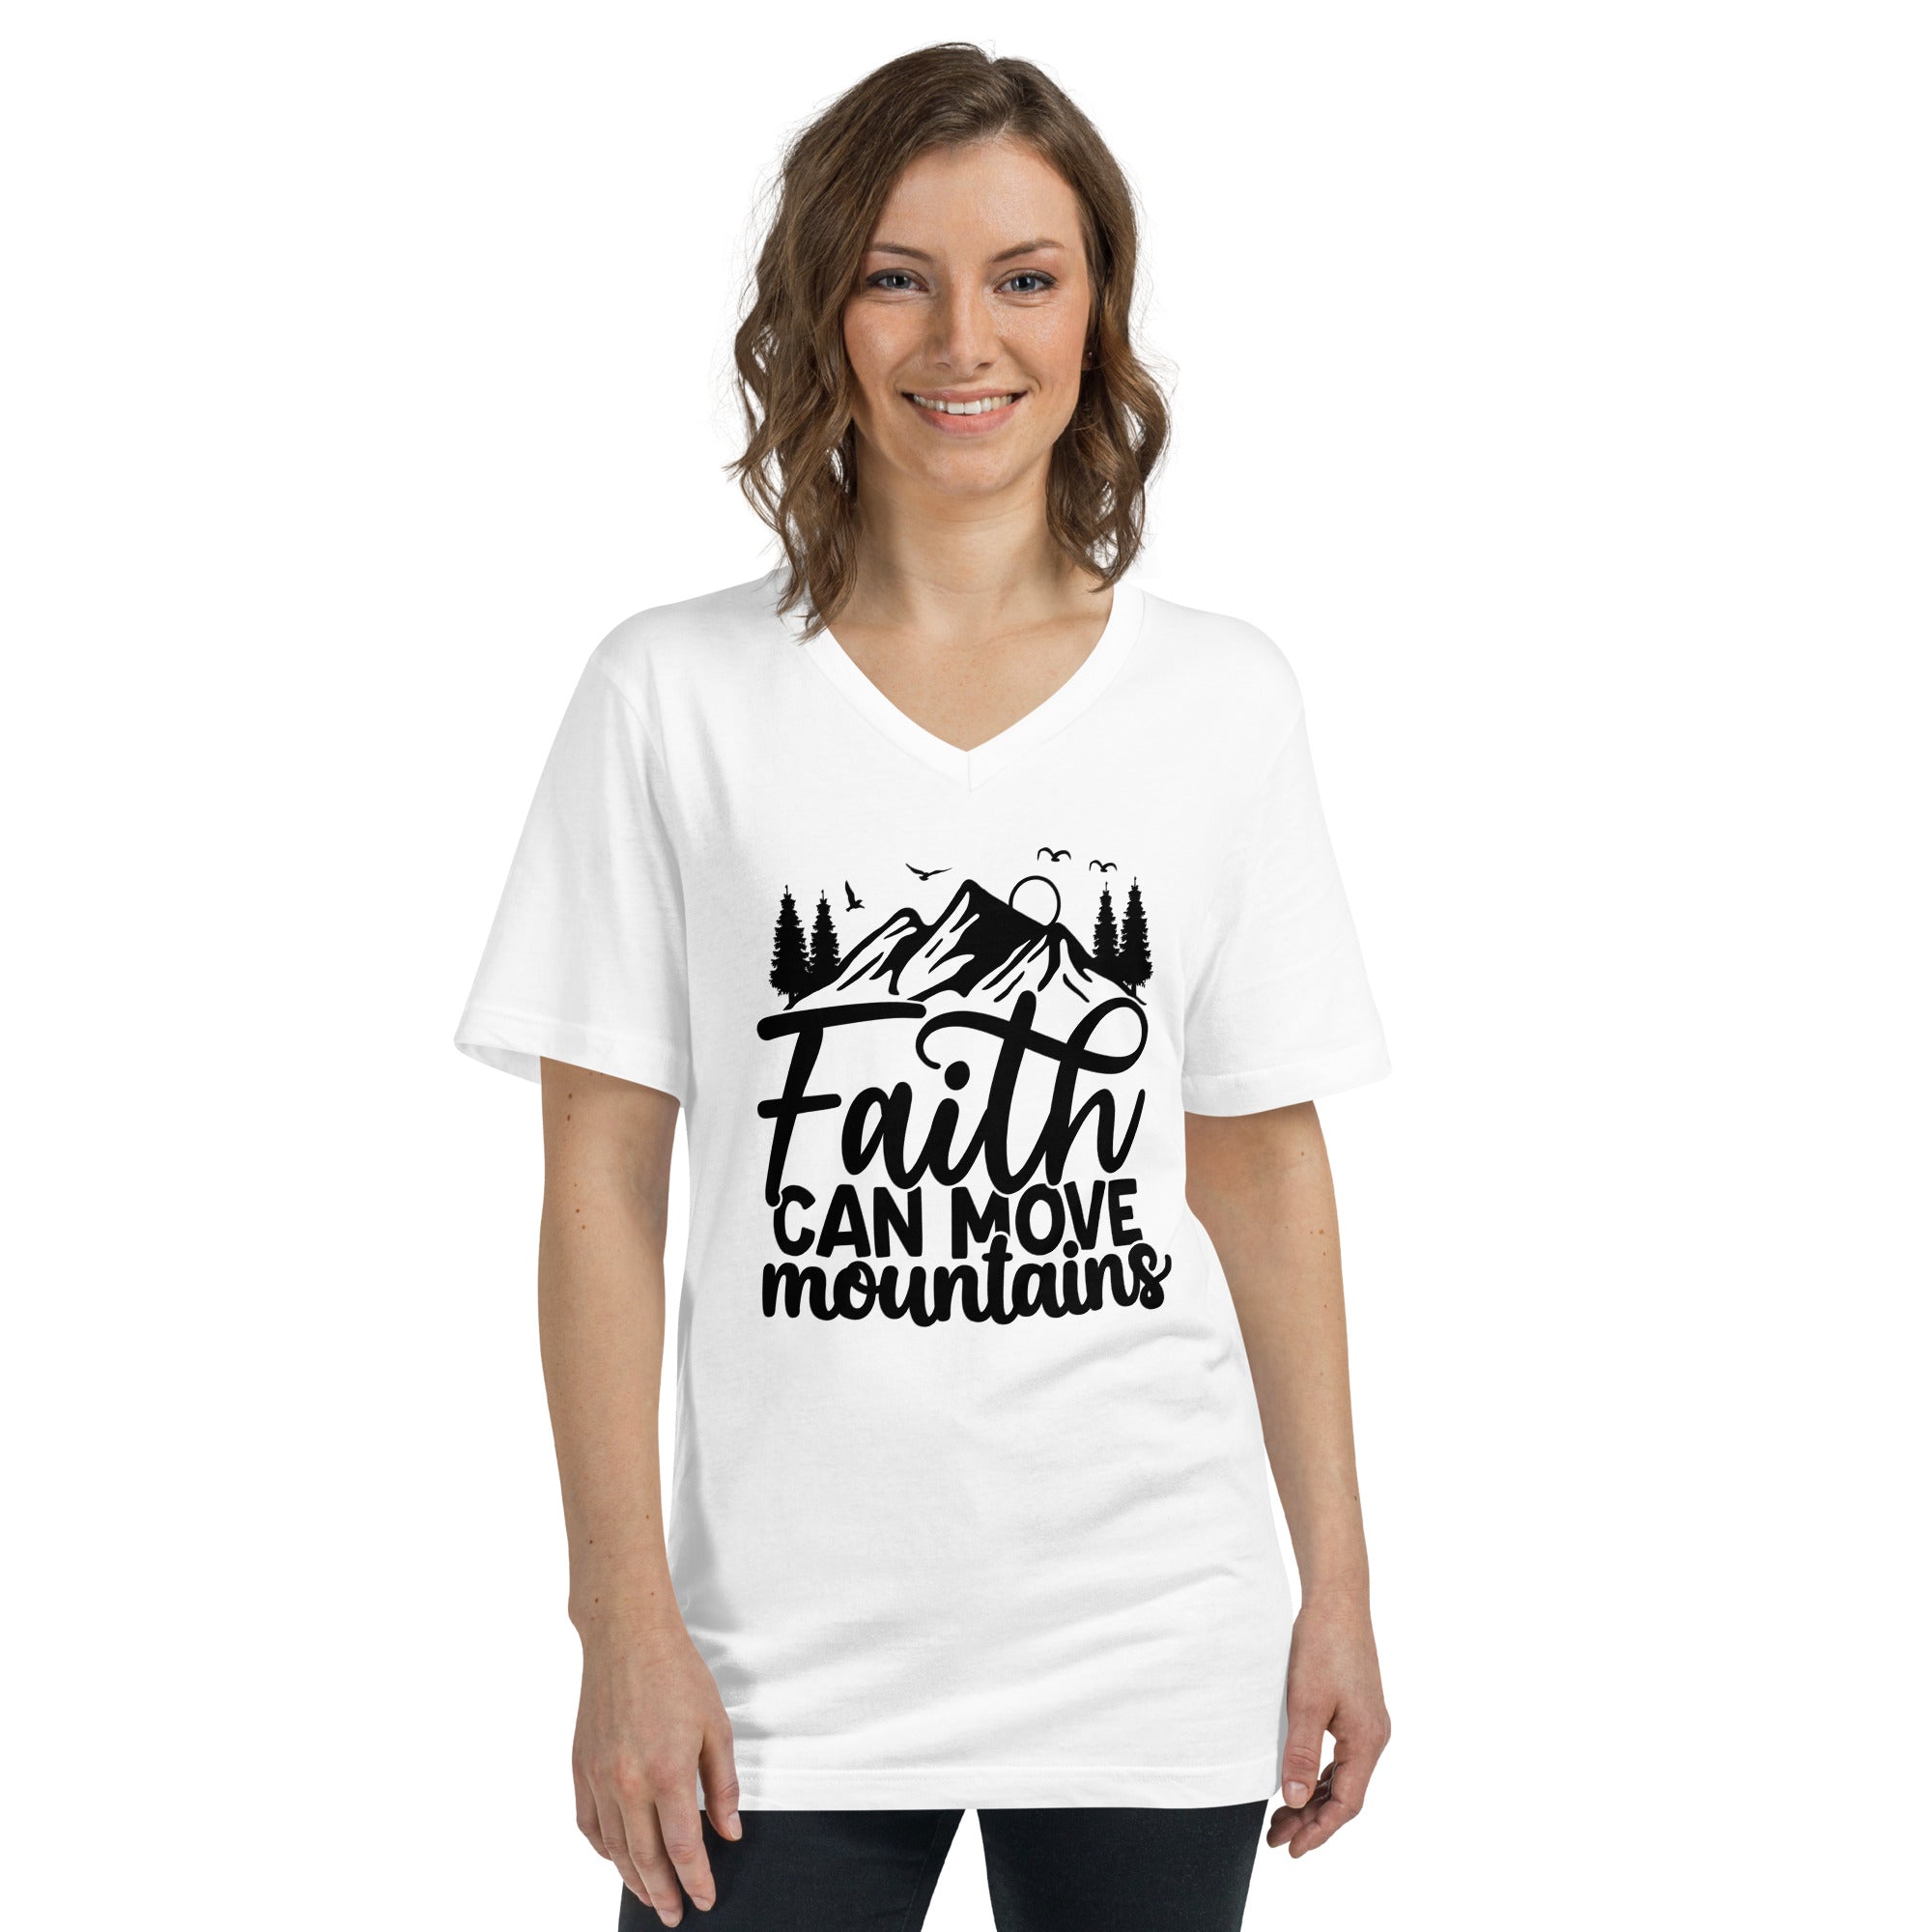 Faith Can Move Mountains - Women's V-Neck T-Shirt